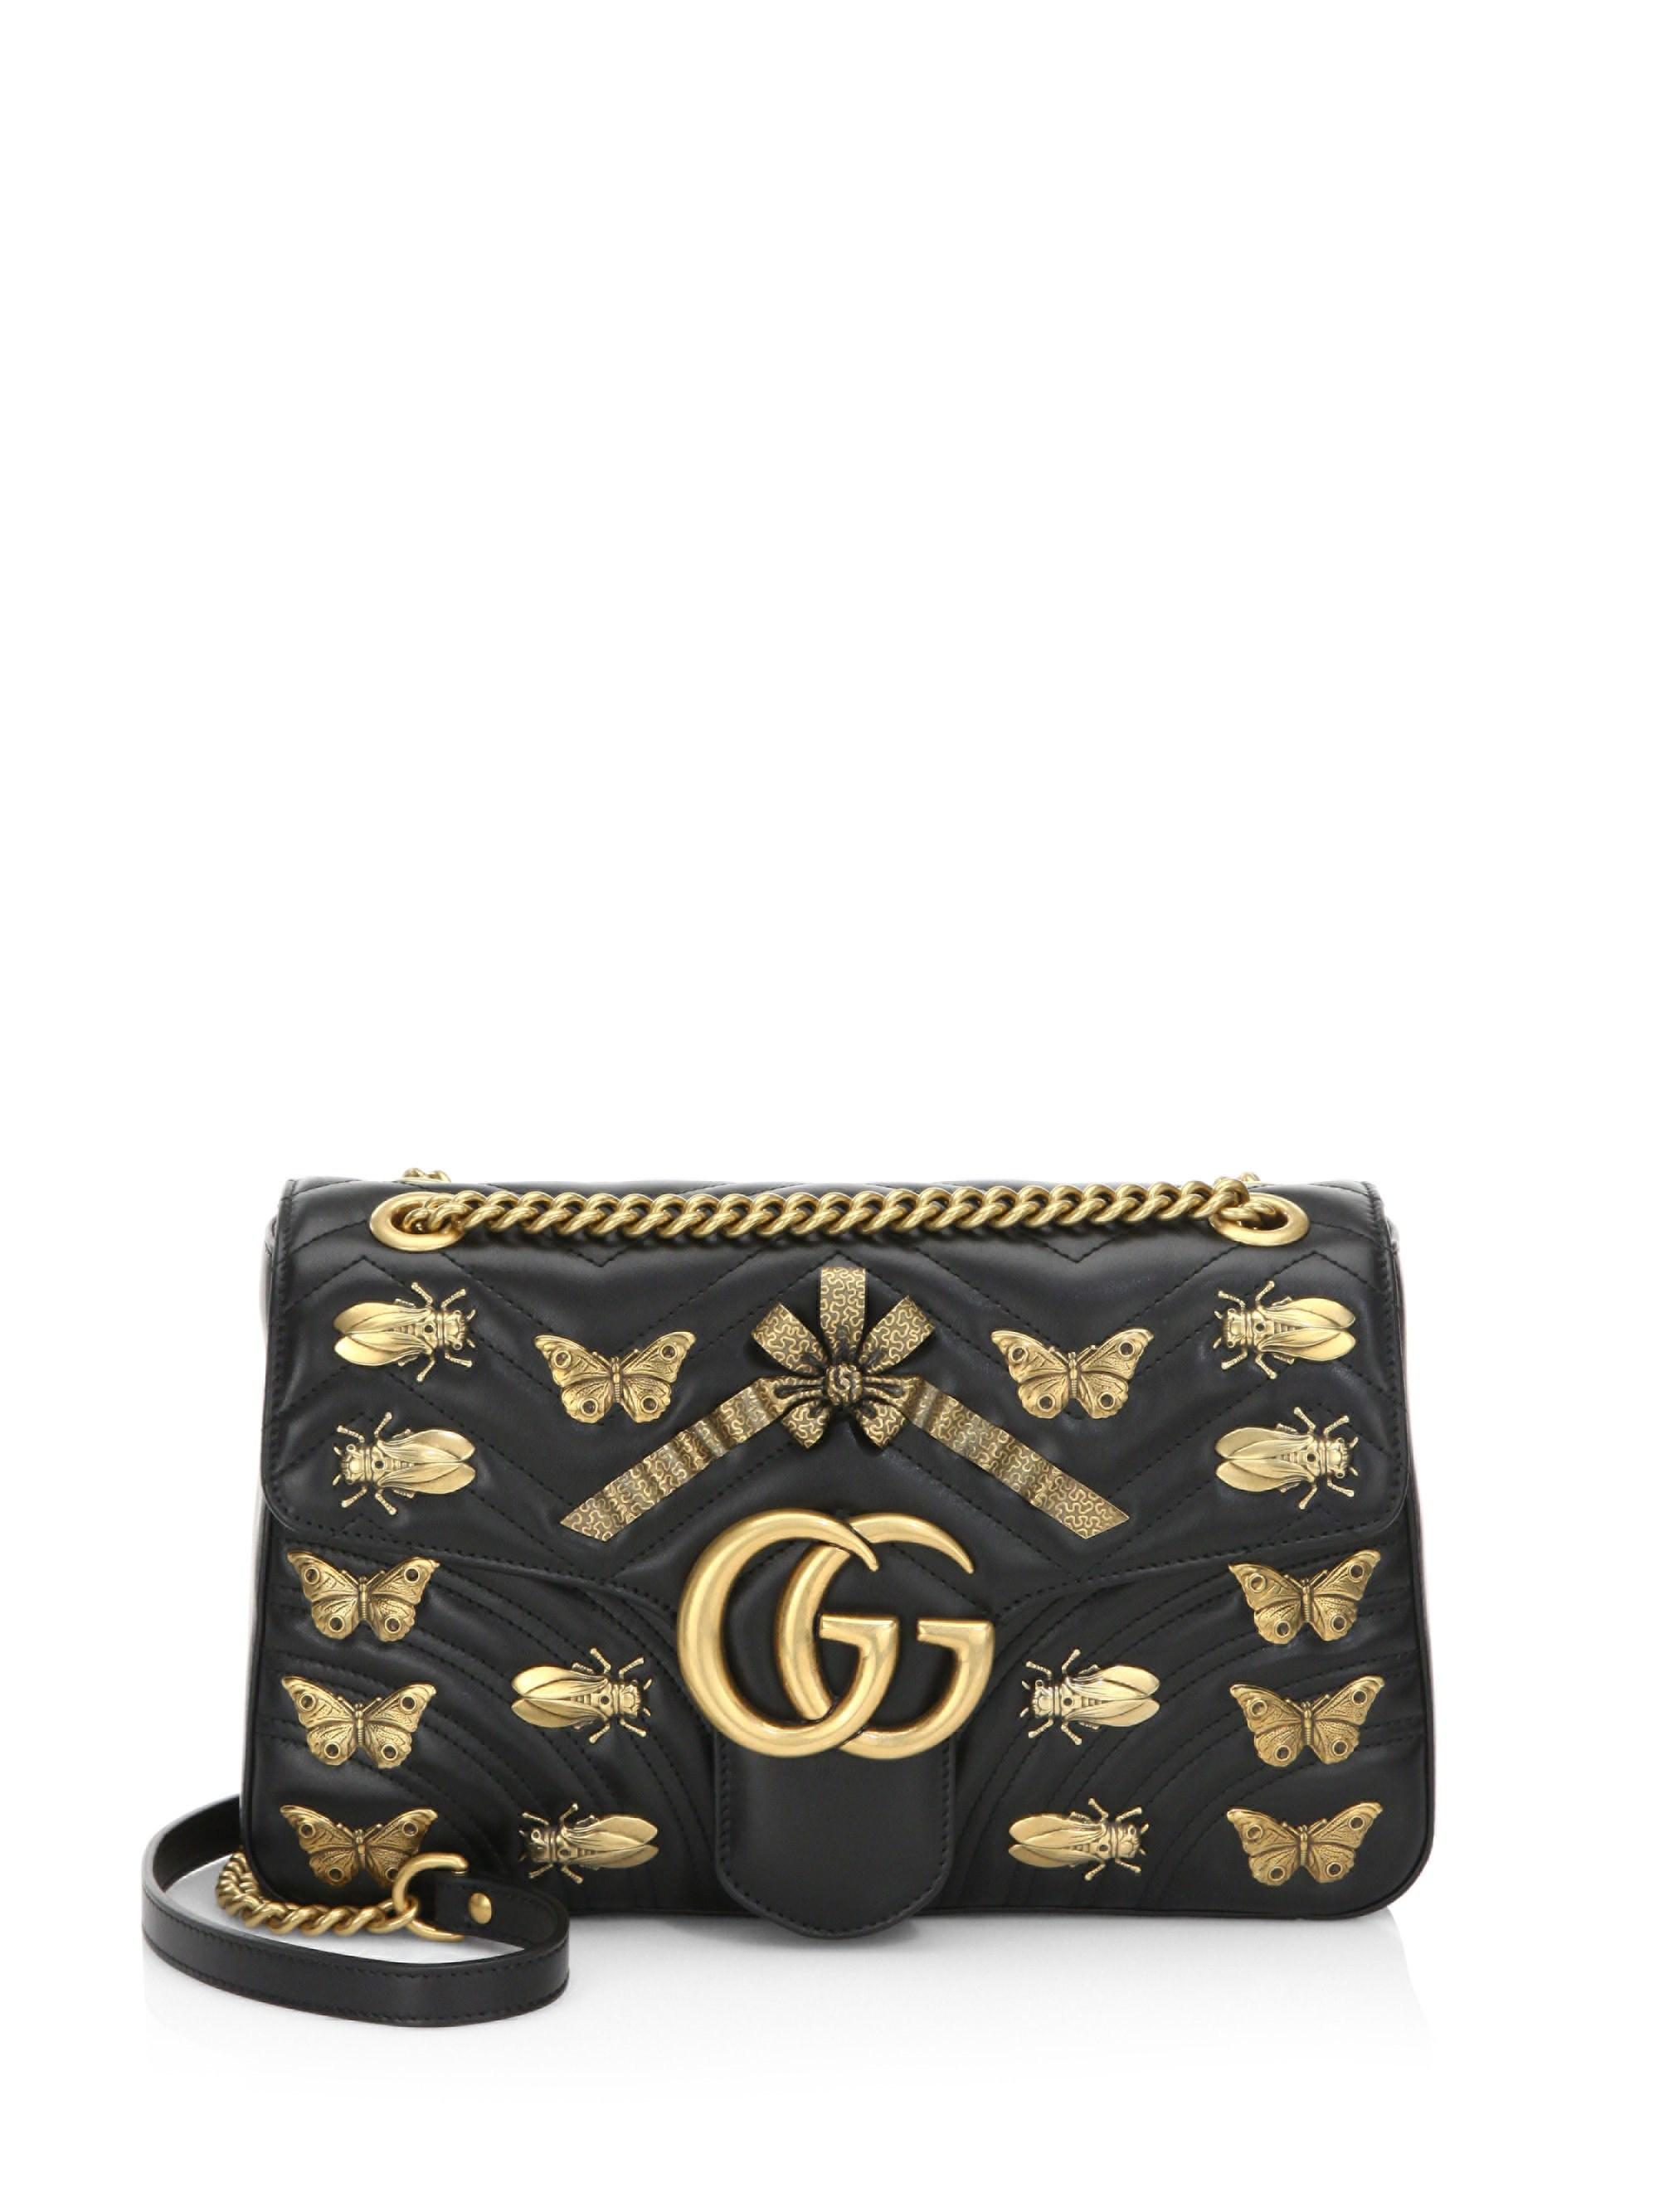 Gucci Gg Medium Matelasse Leather Chain Shoulder in Black - Lyst